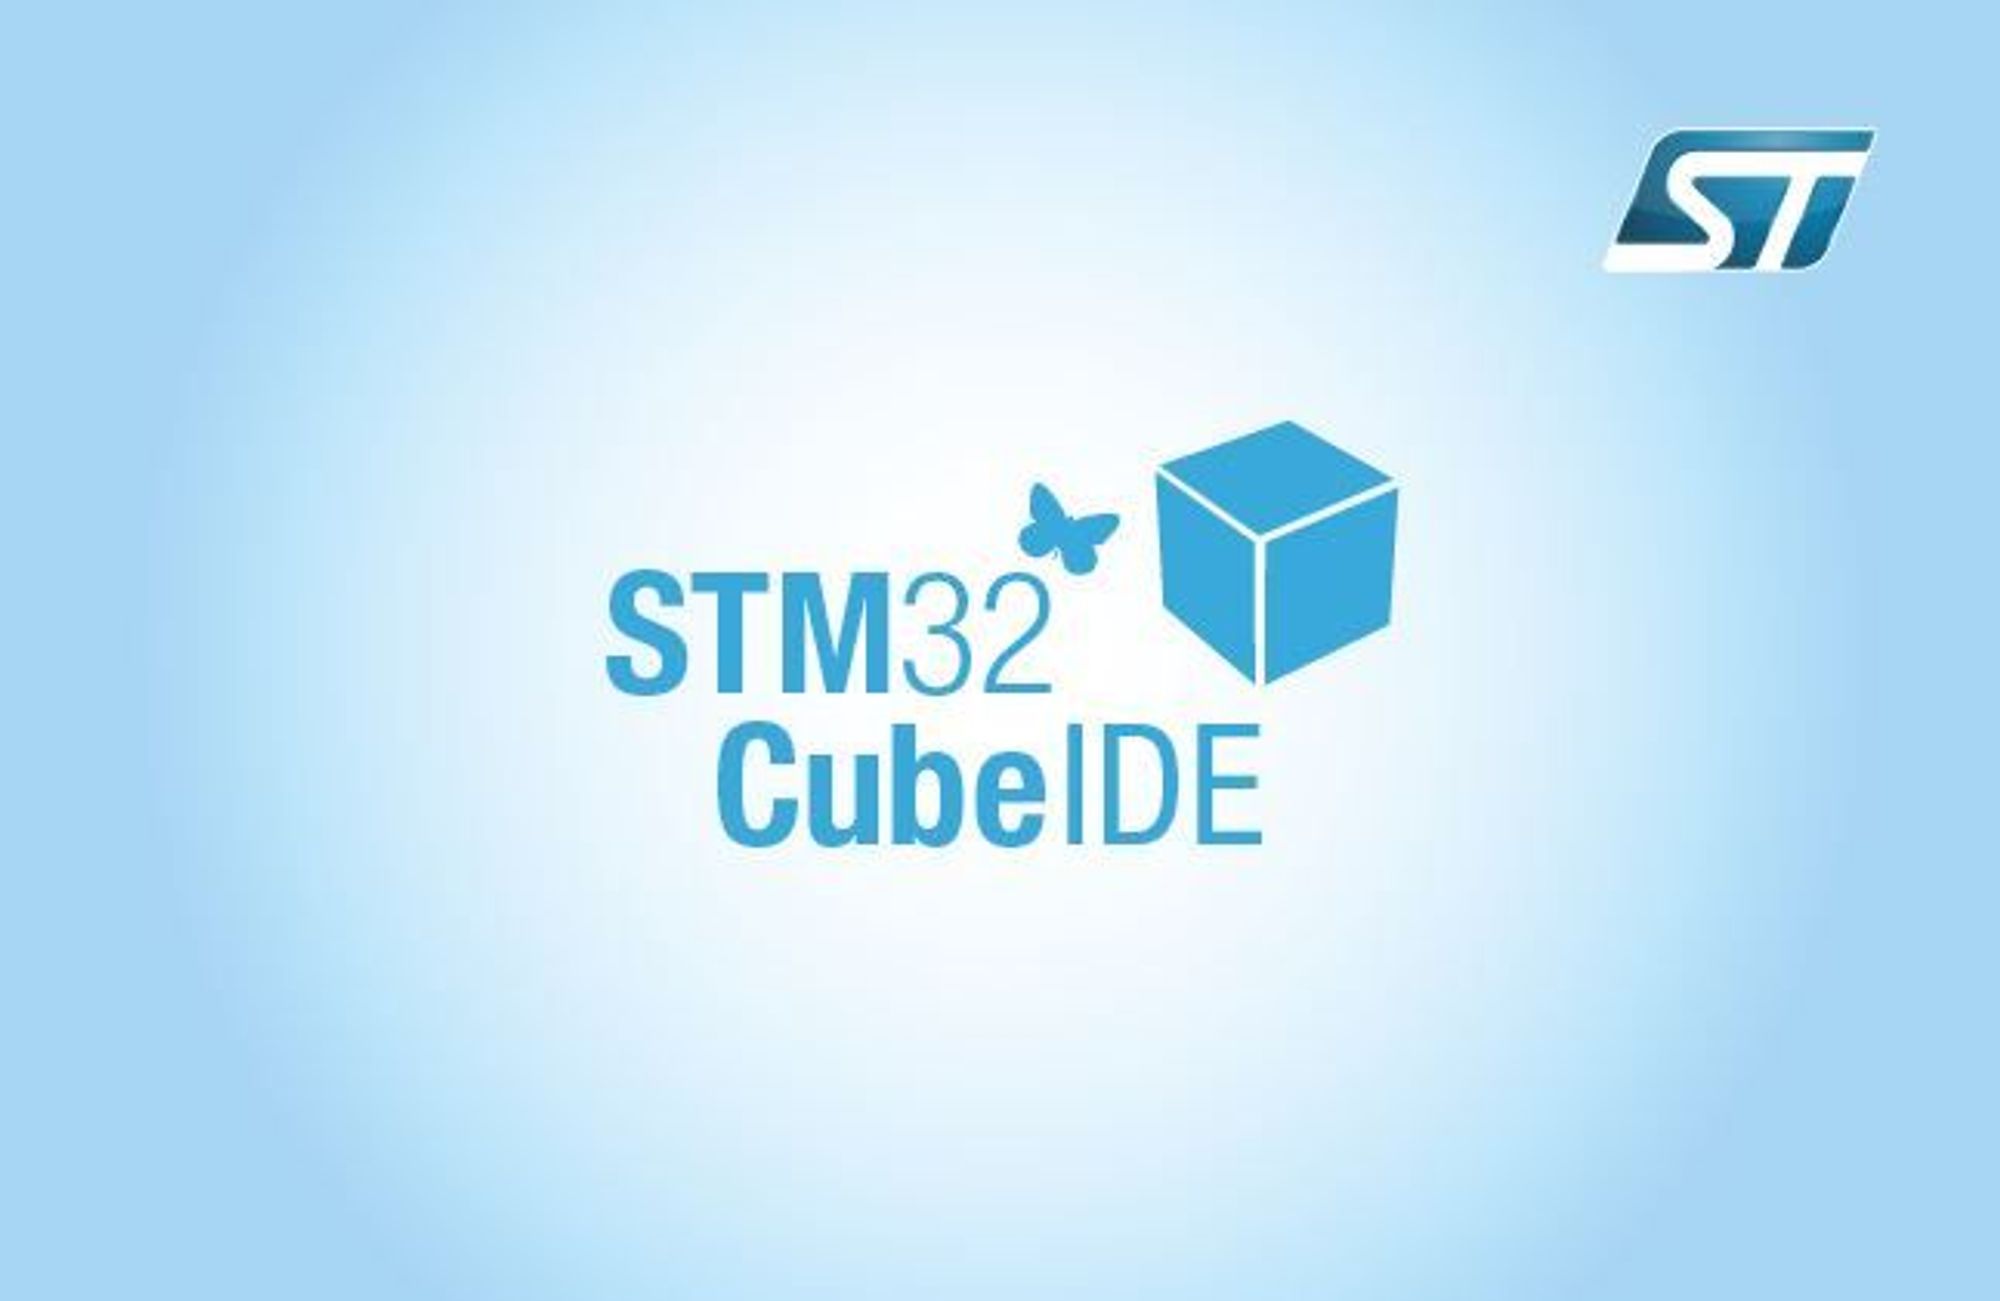 Stm32 cube programmer. Stm32cubemx ide. Cube MX stm32. Stm32 Cube ide. Stm32cubeide stm32cubemx.